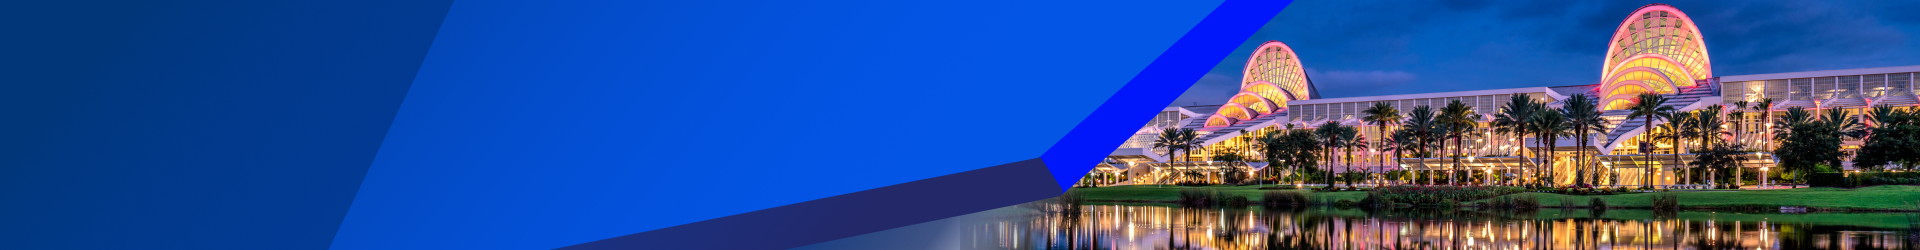 Blue gradient with Orange County Convention Center, Orlando, Florida